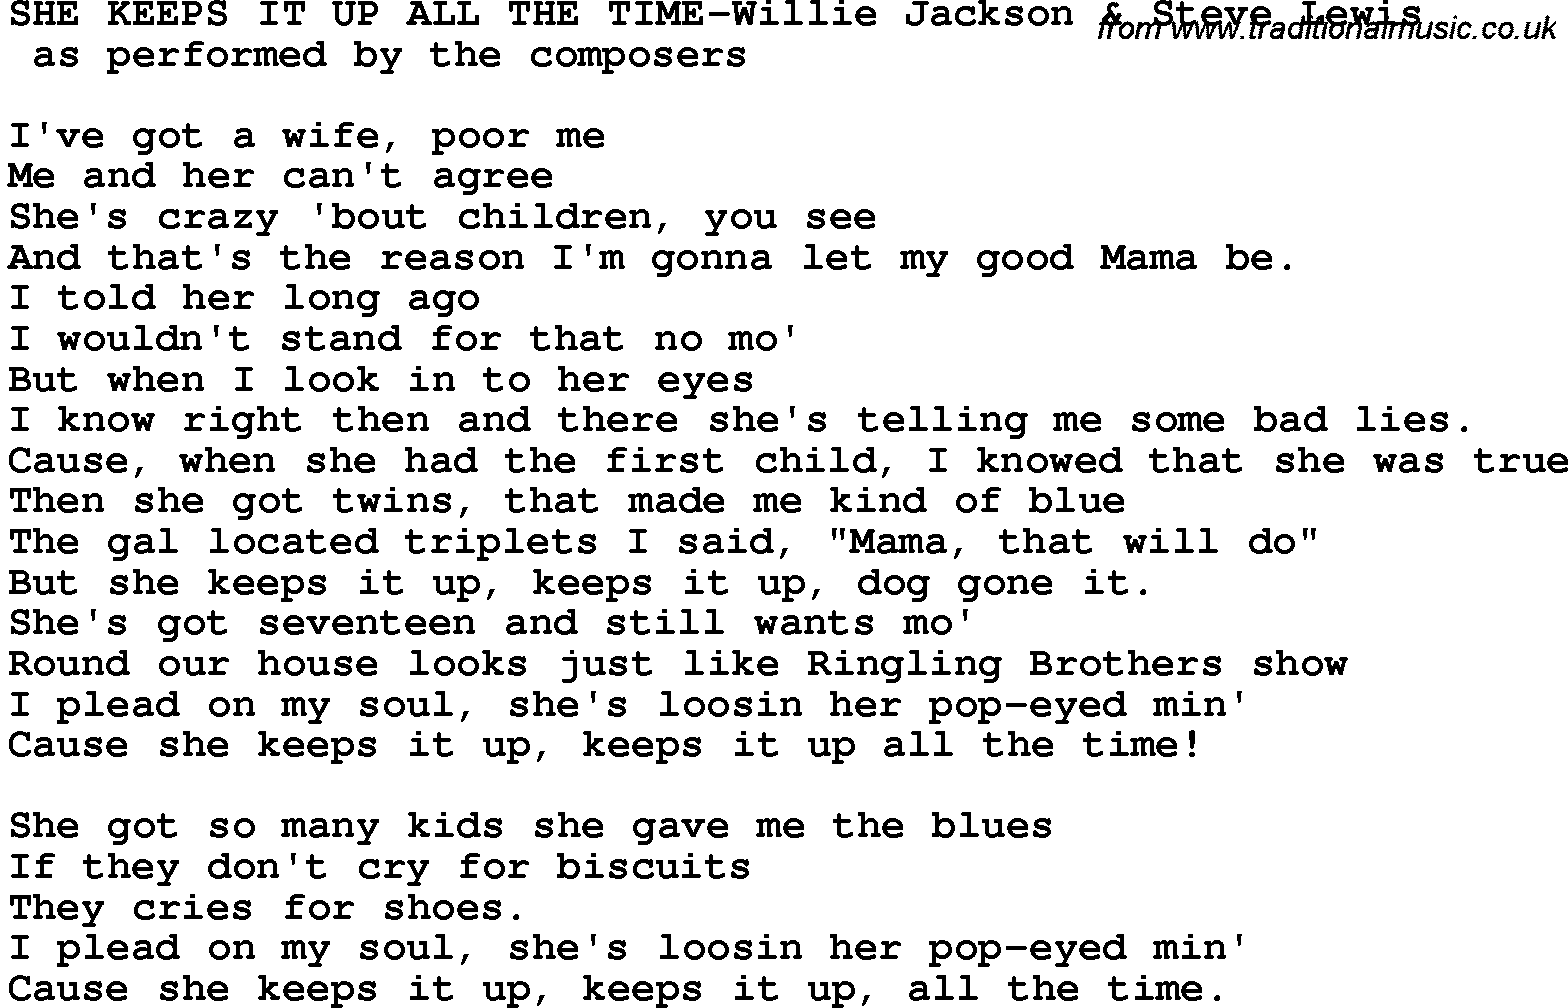 Novelty song: She Keeps It Up All The Time-Willie Jackson & Steve Lewis lyrics